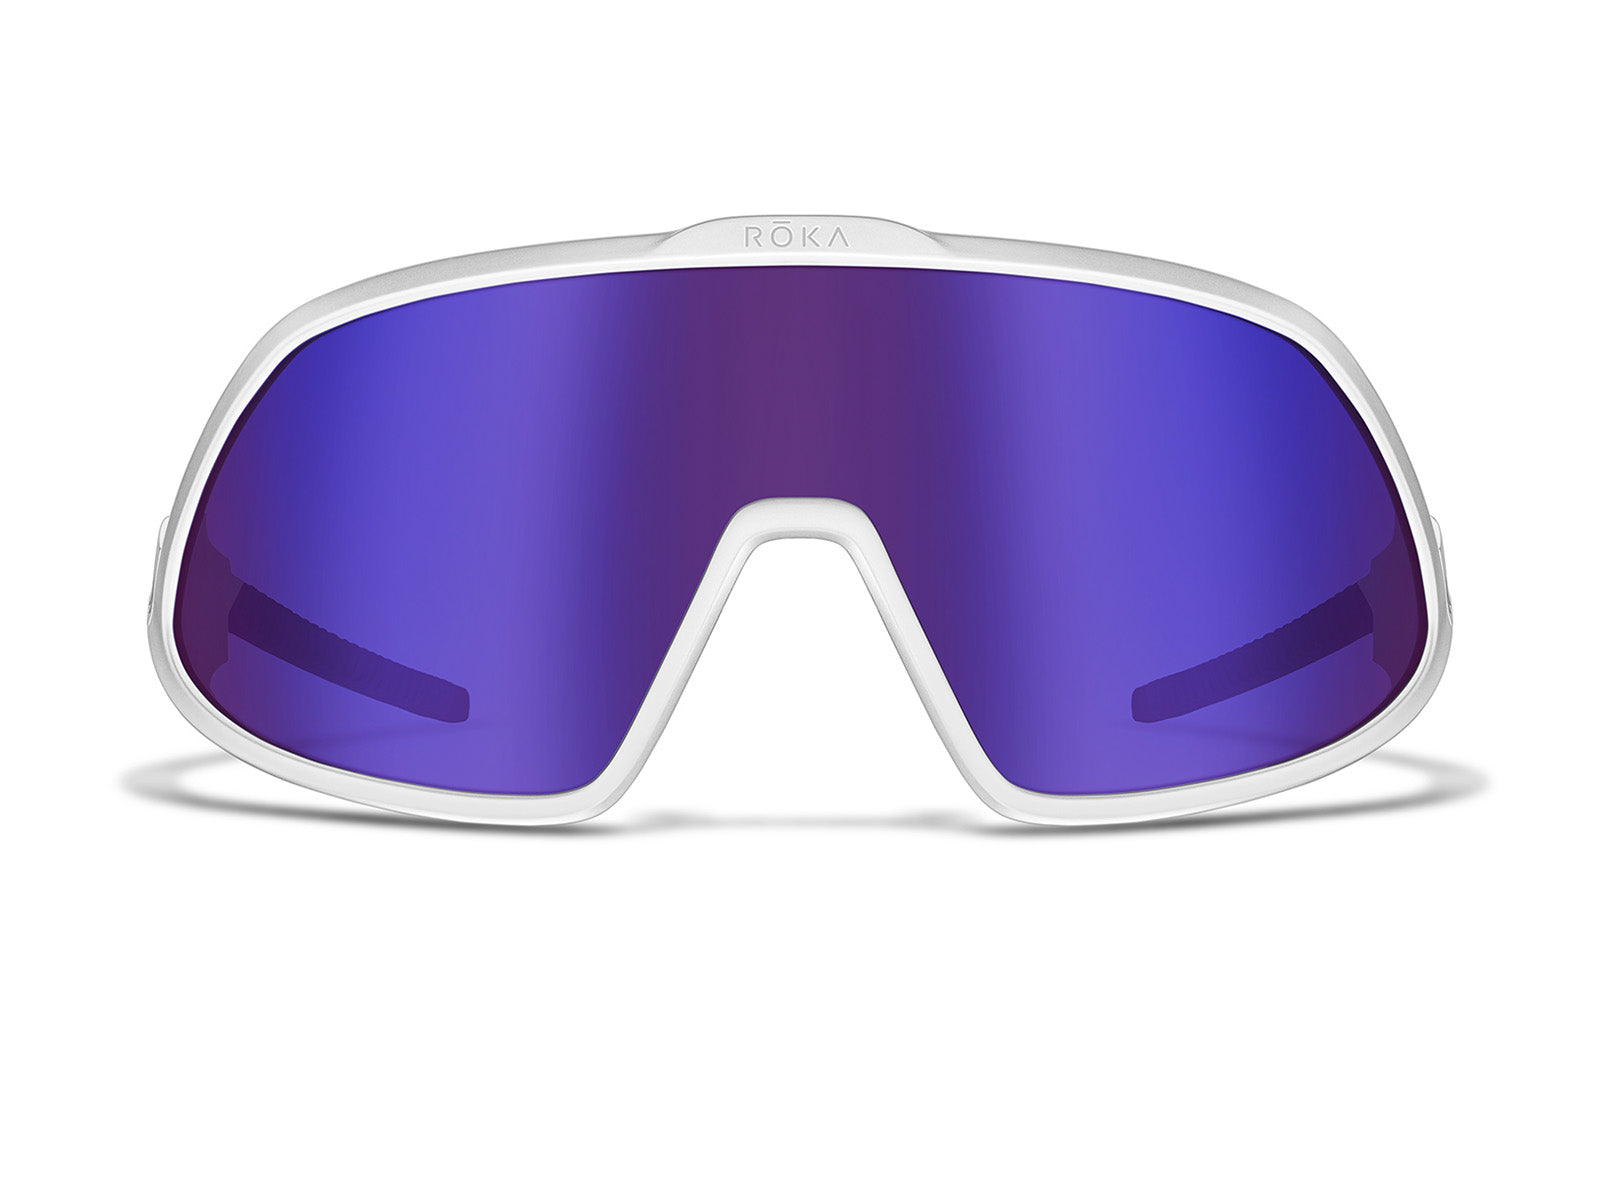 Roka Matador Sunglasses in Gloss Black - Clear Lens